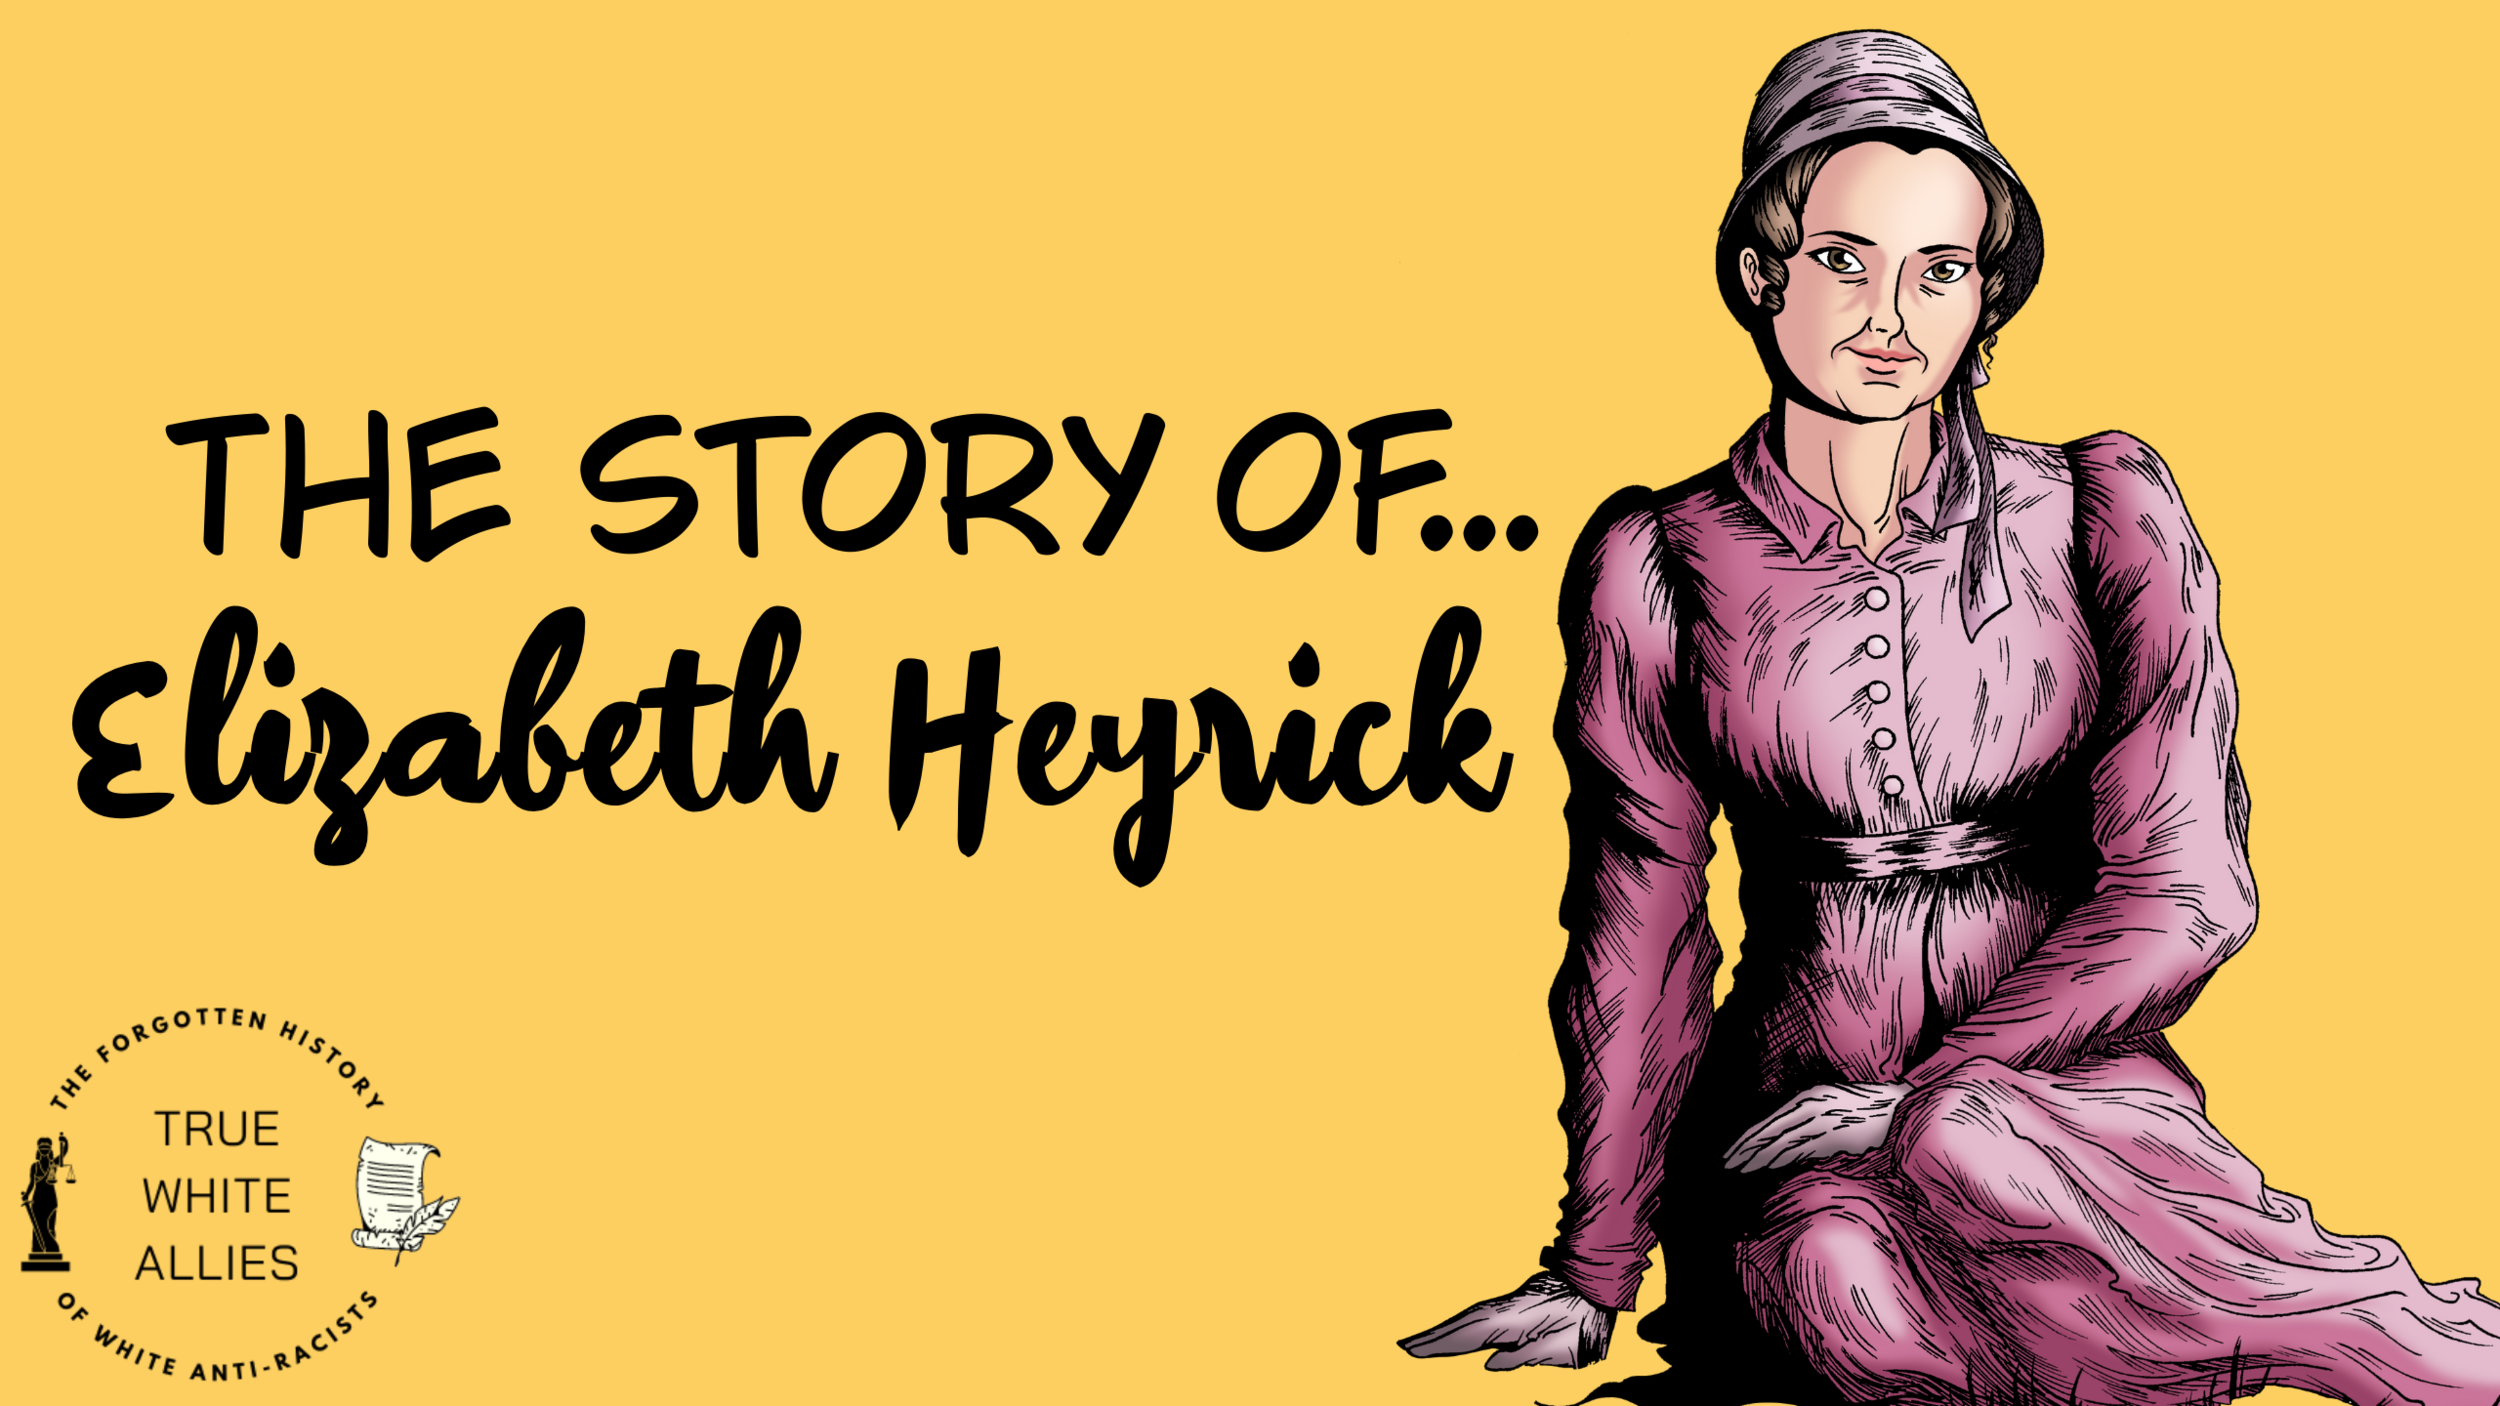 The Story of Elizabeth Heyrick  (Copy)